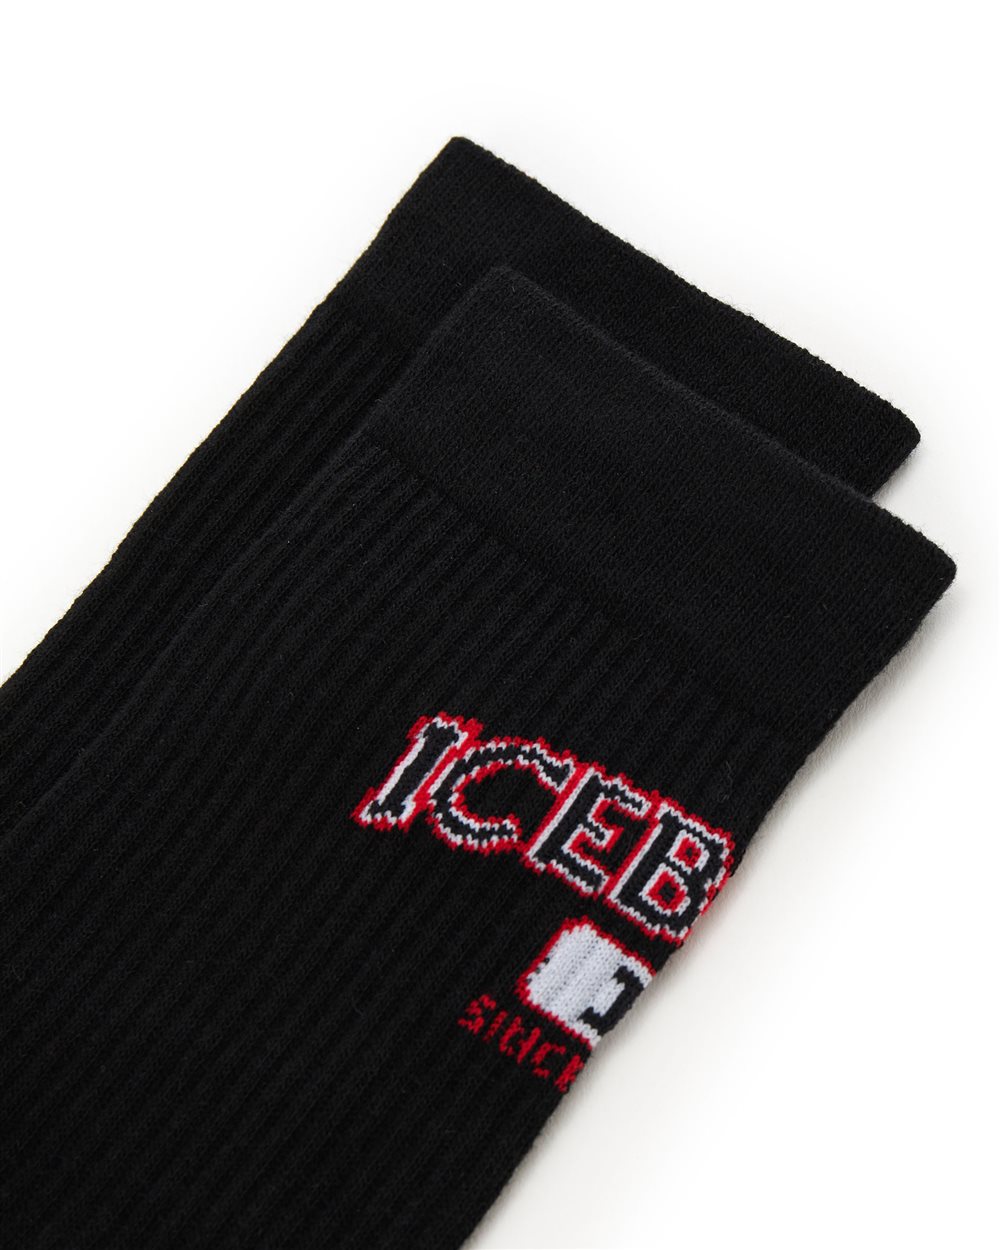 Cotton socks with logo - Iceberg - Official Website